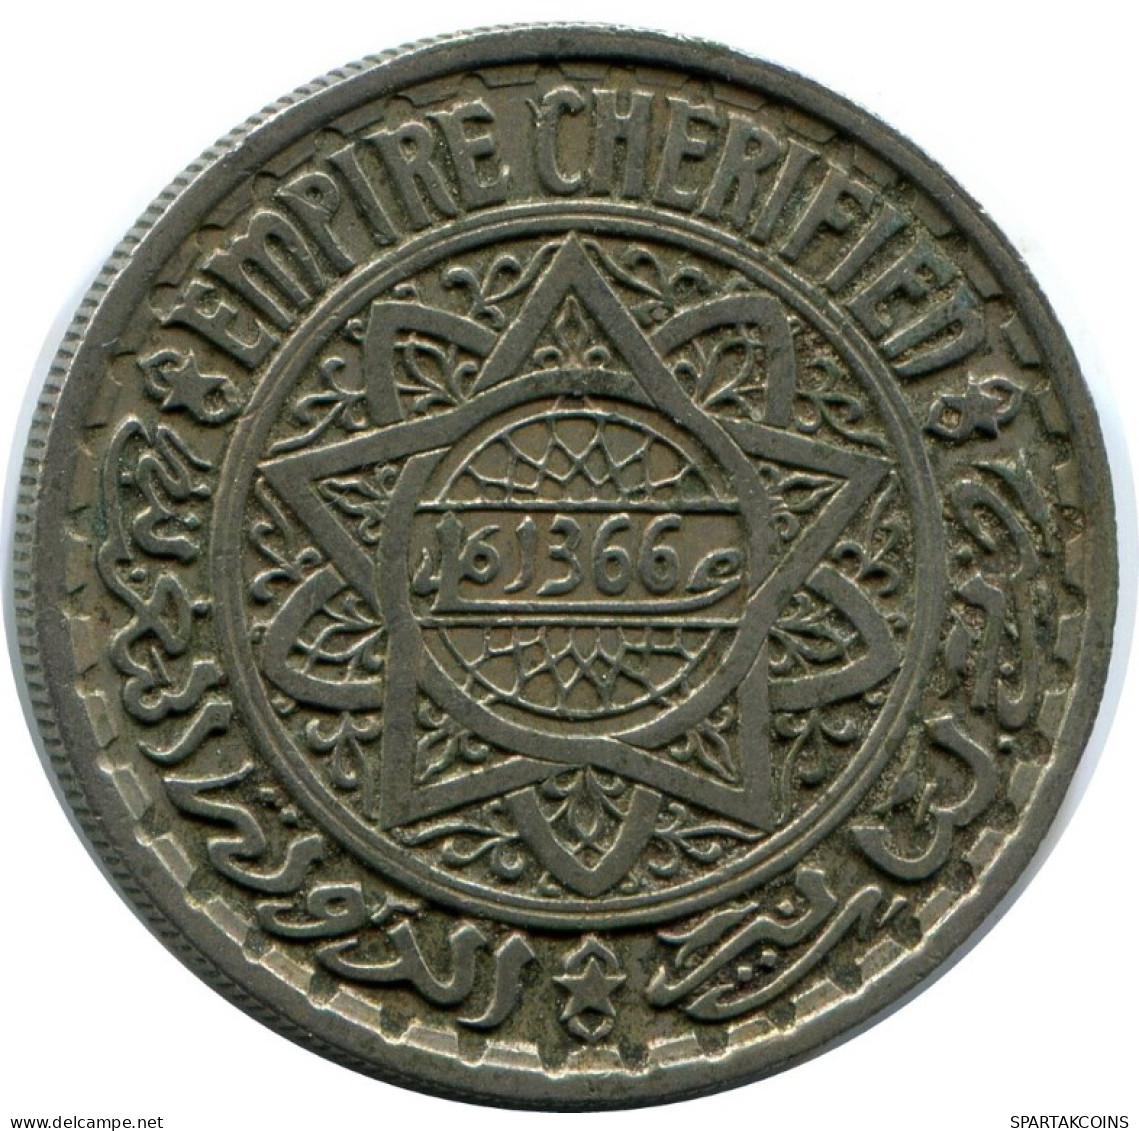 10 FRANCS 1952 MOROCCO Islamisch Münze #AH639.3.D.A - Morocco